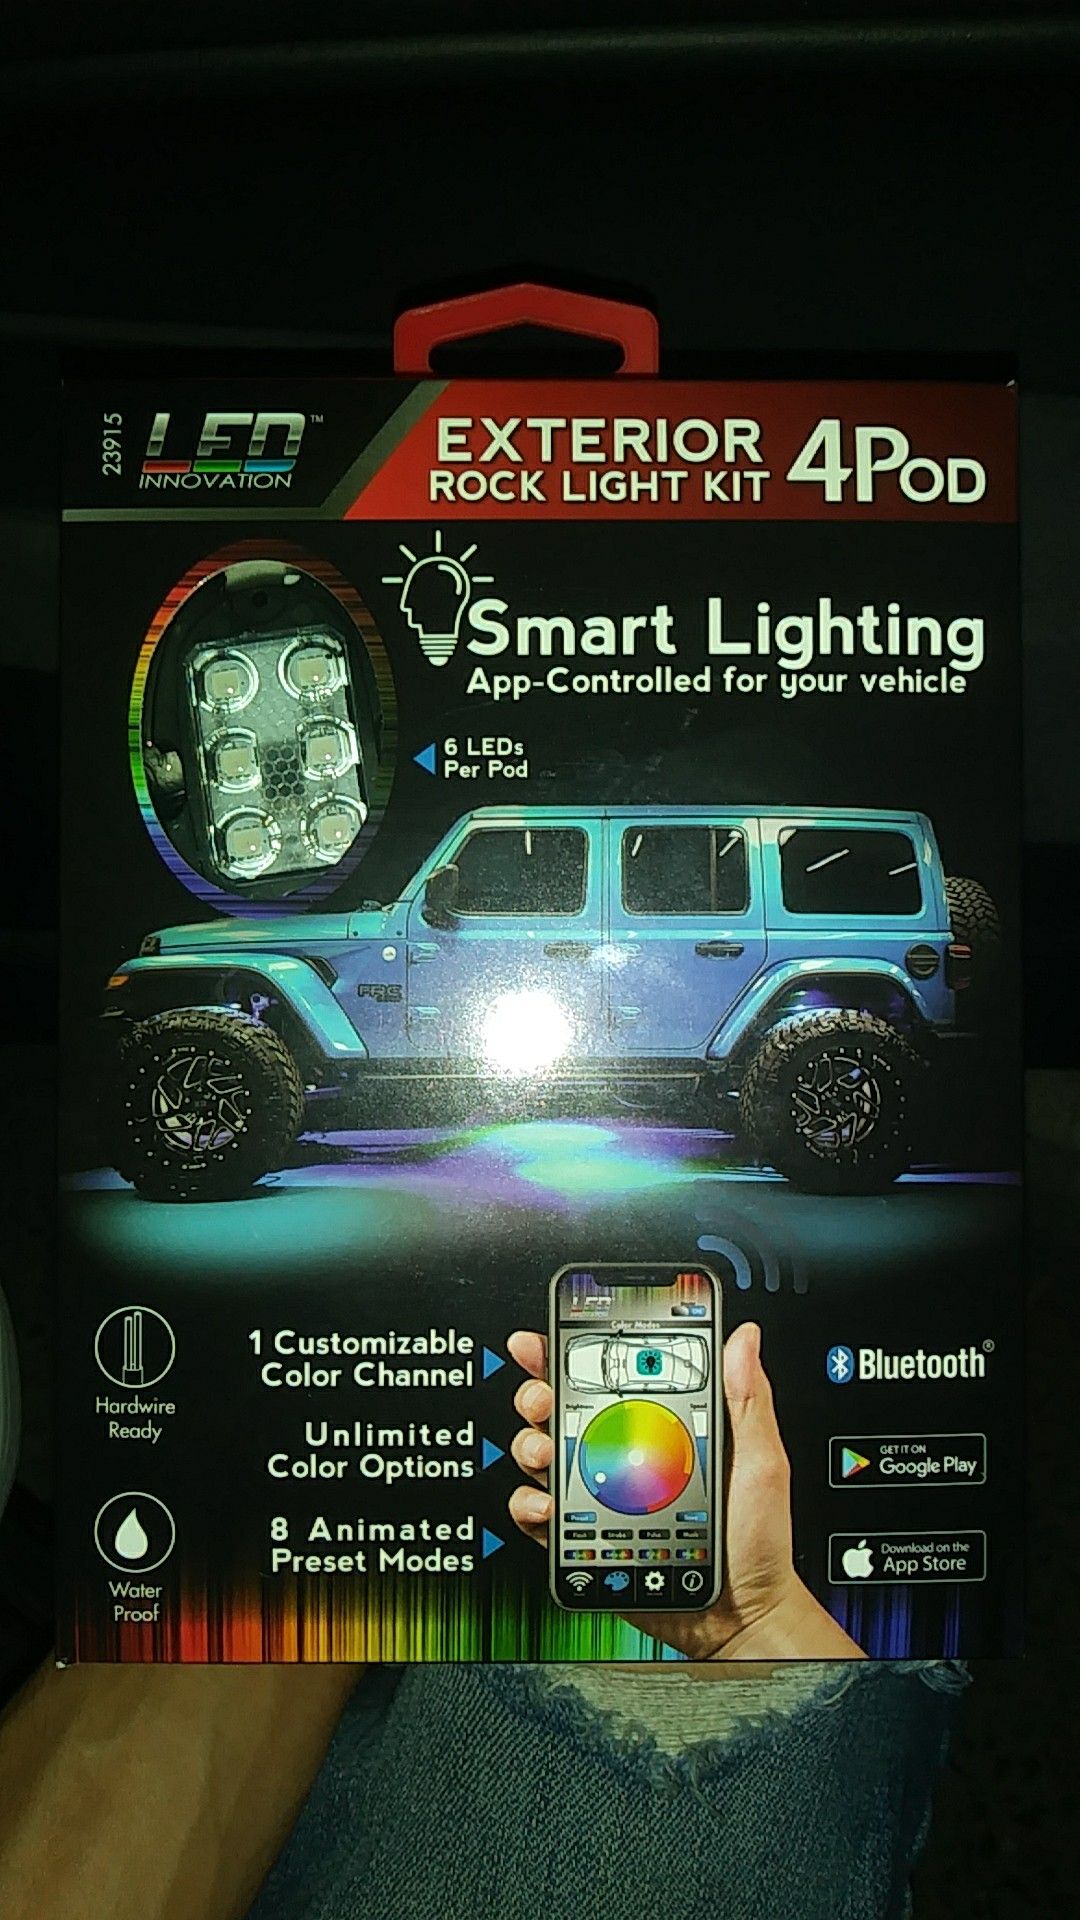 Exterior Rock Light Kit 4Pod